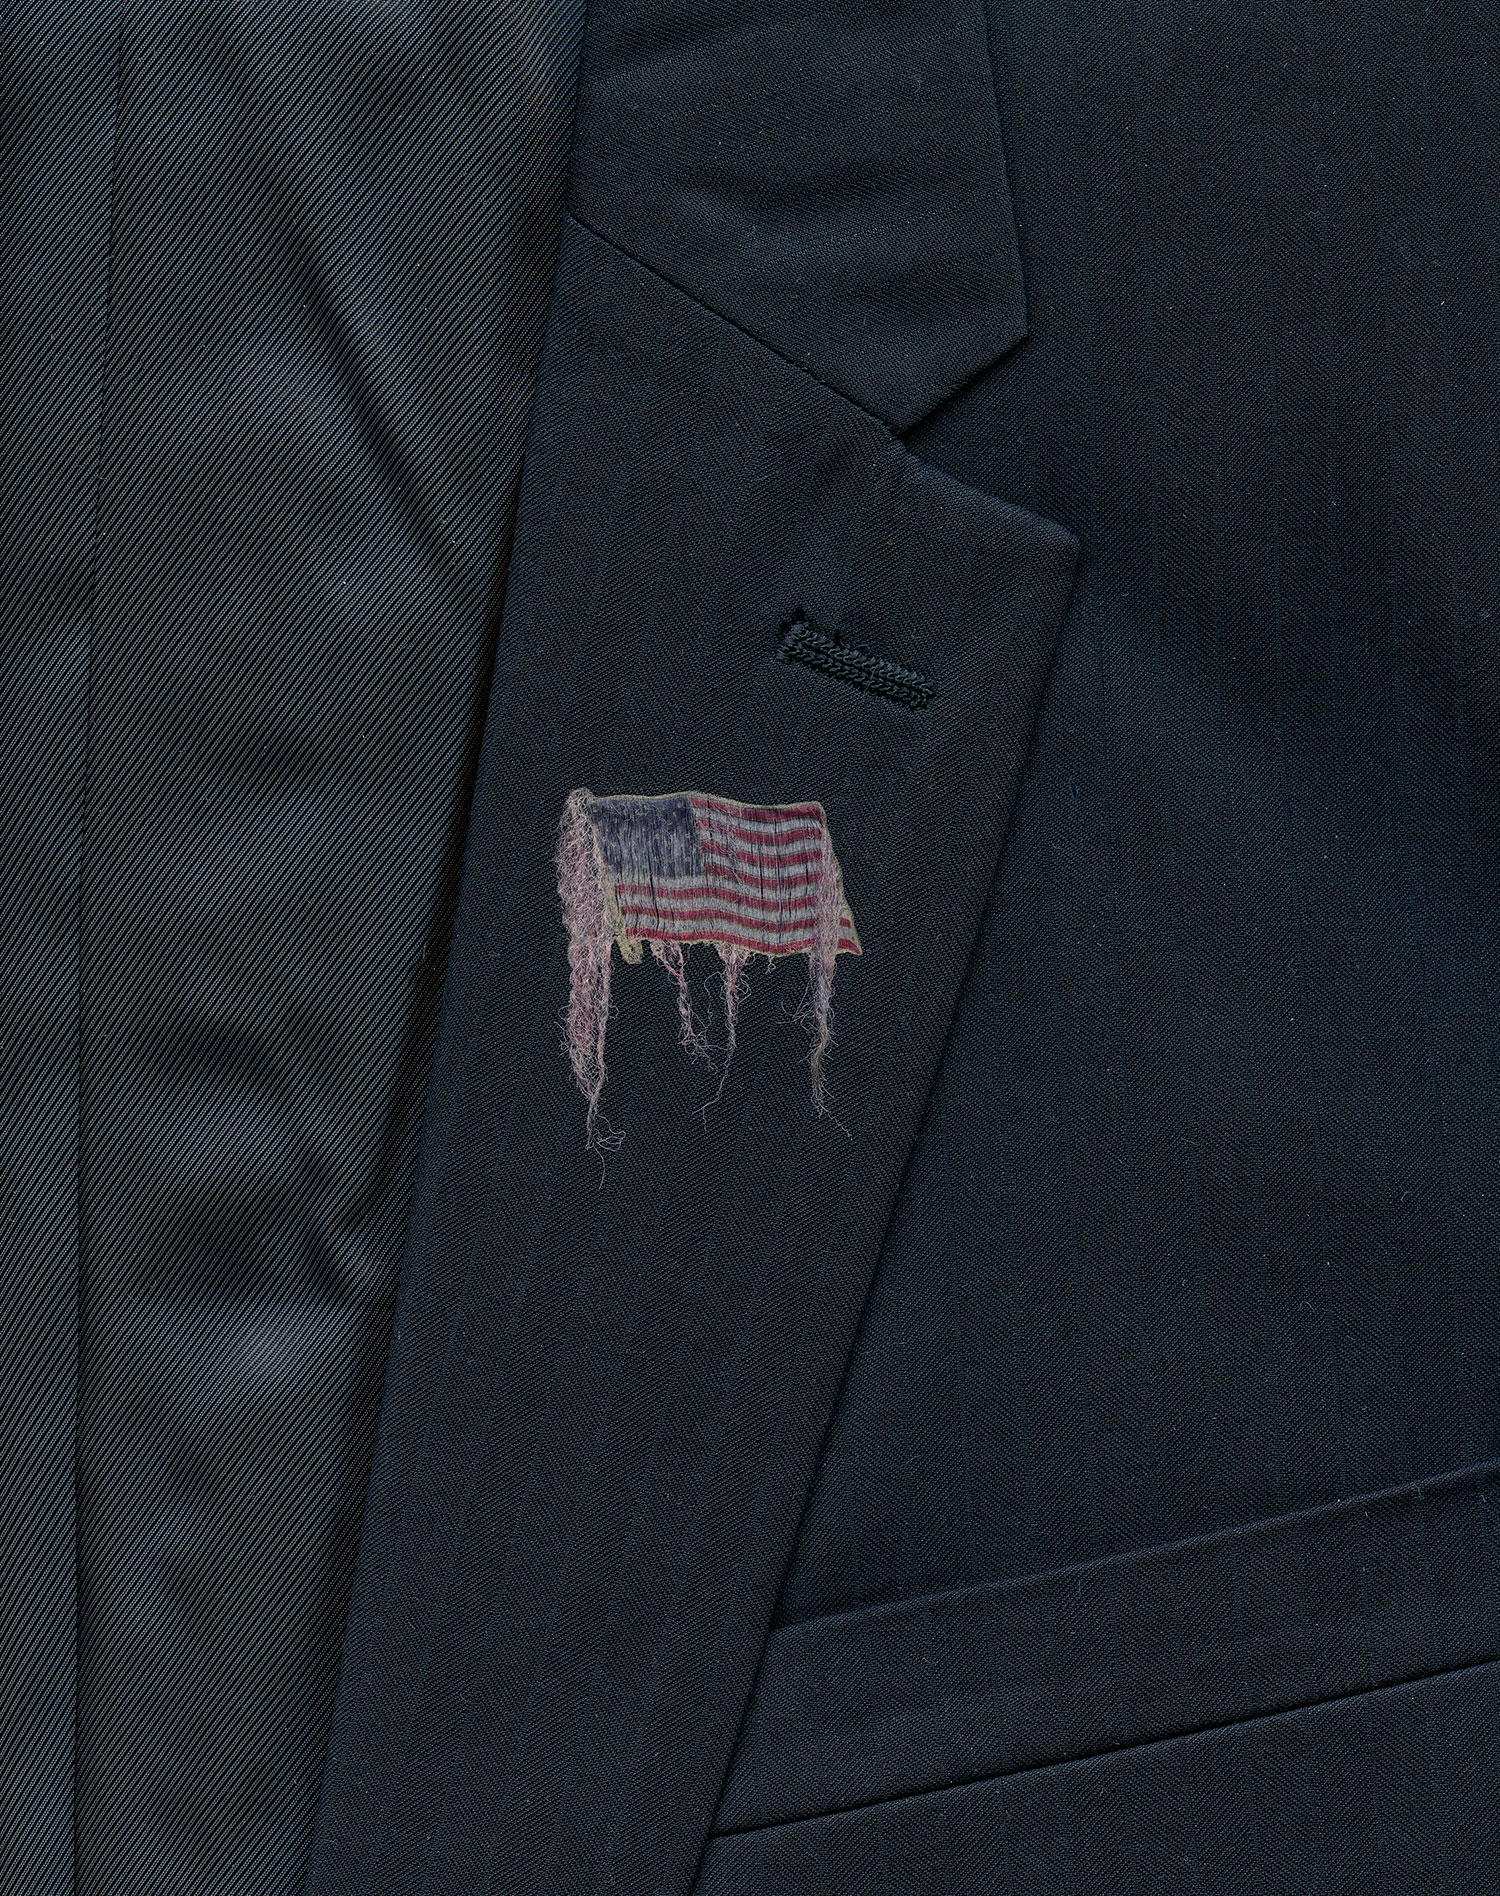 Unraveling: Suit with Lapel Pin - Detail, Lapel